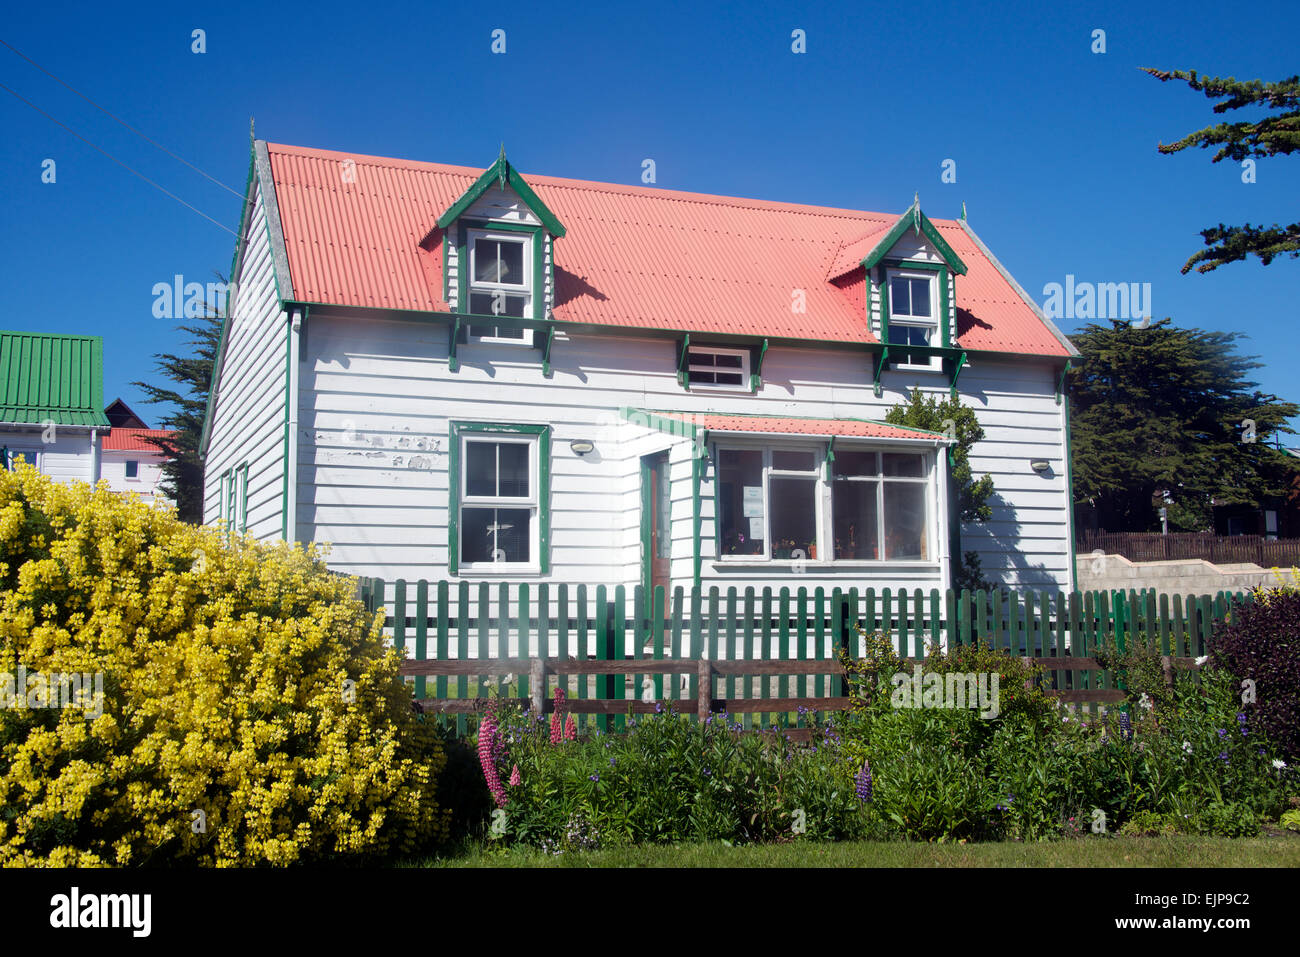 Grazioso cottage weatherboard Port Stanley nelle isole Falkland Foto Stock